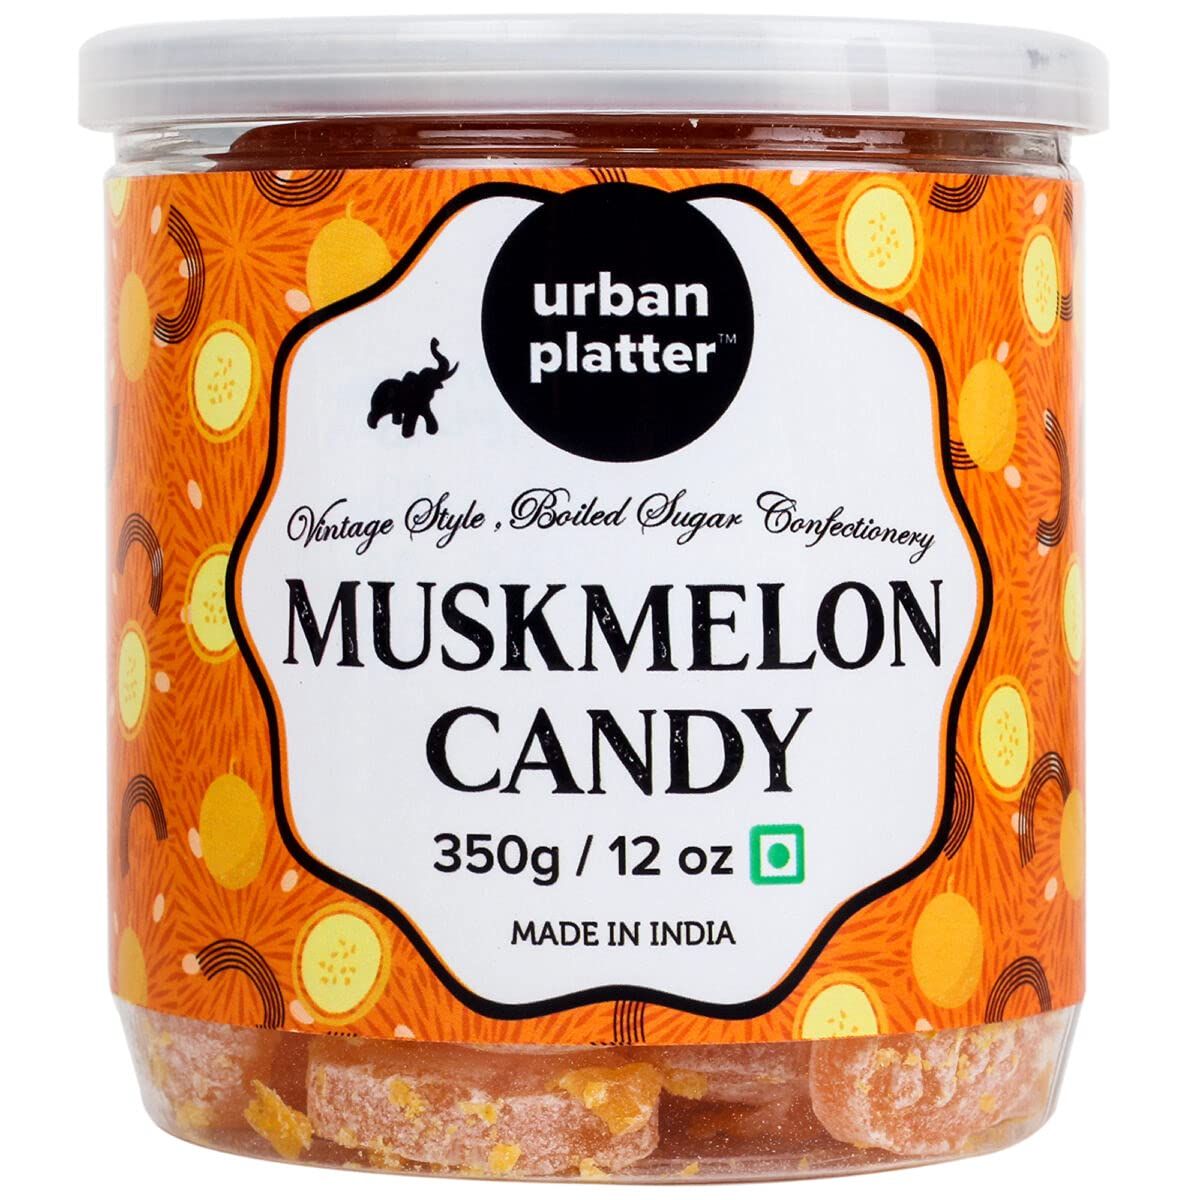 Urban Platter Muskmelon Candy Image